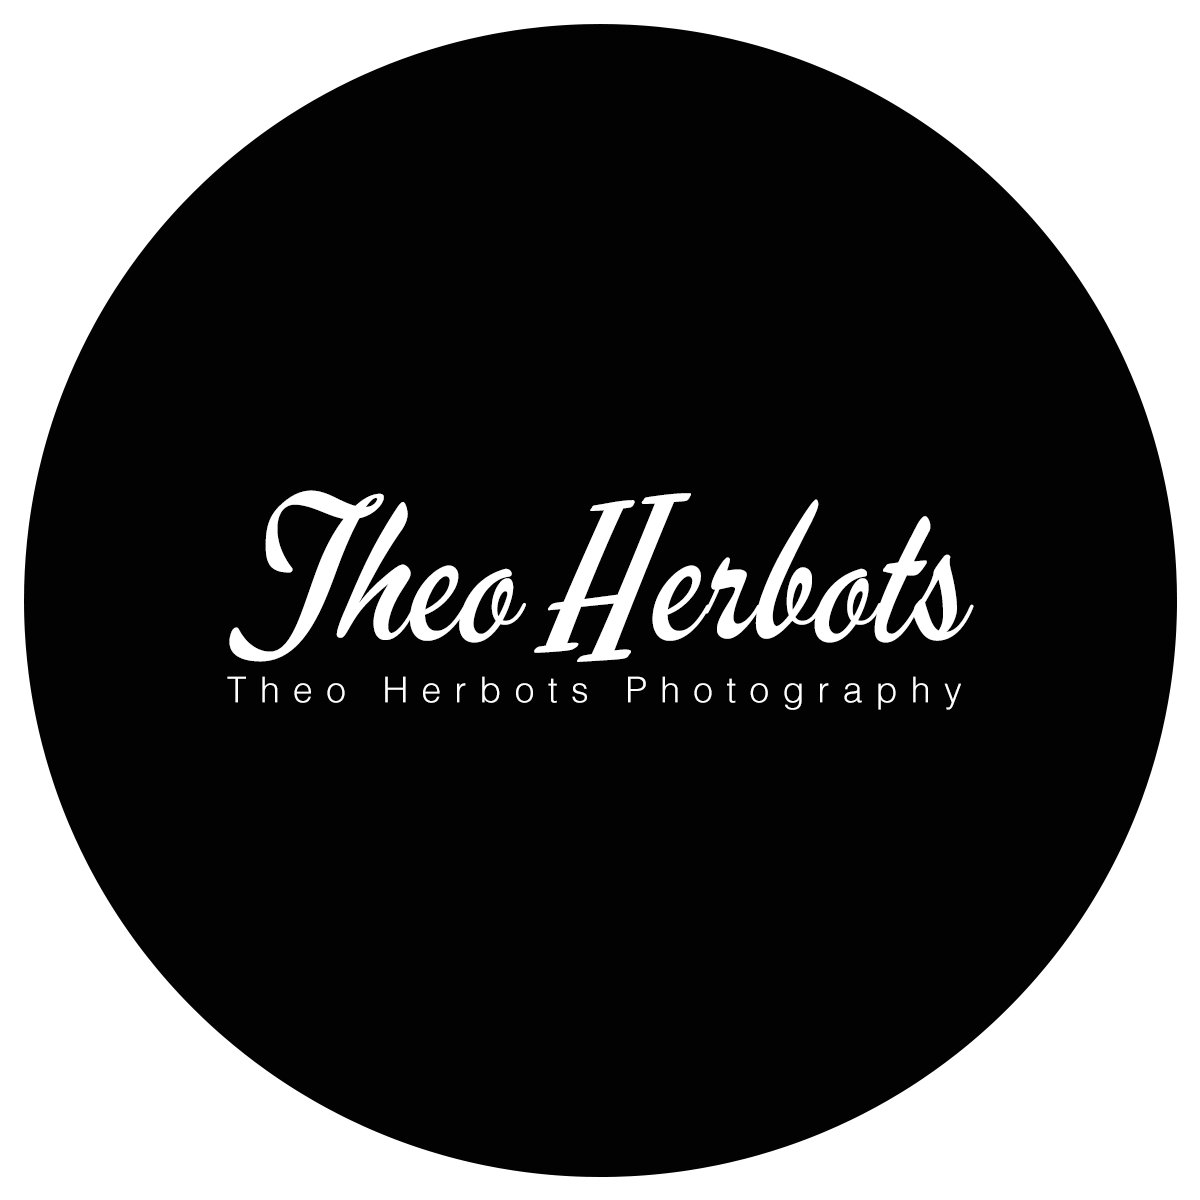 Theo-Herbots-Fotograaf logo